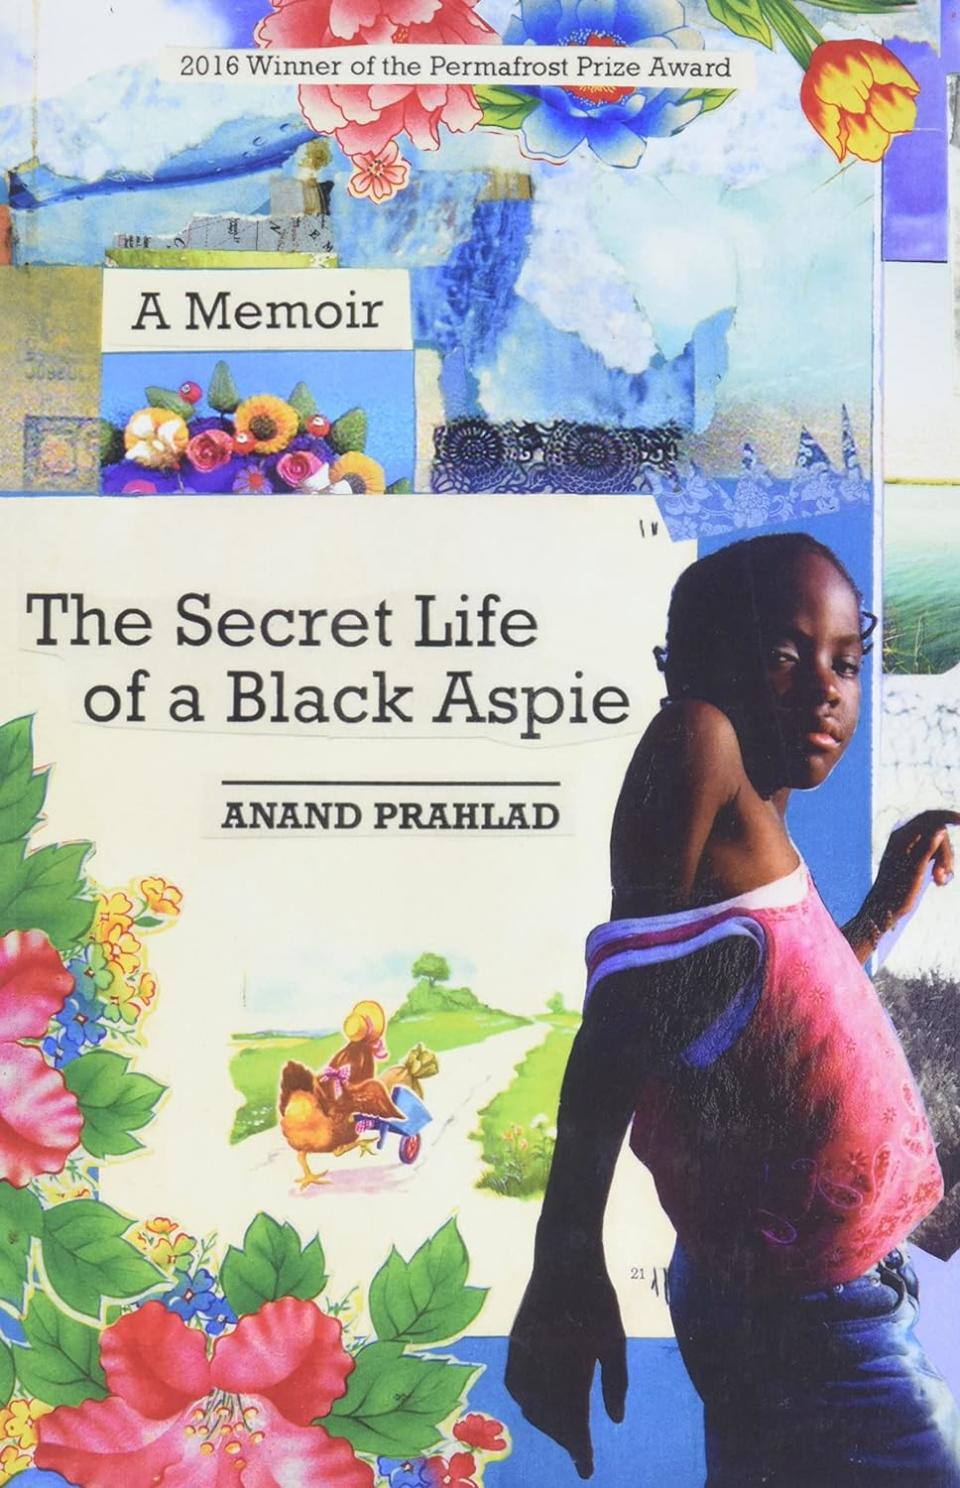 "The Secret Life of a Black Aspie"